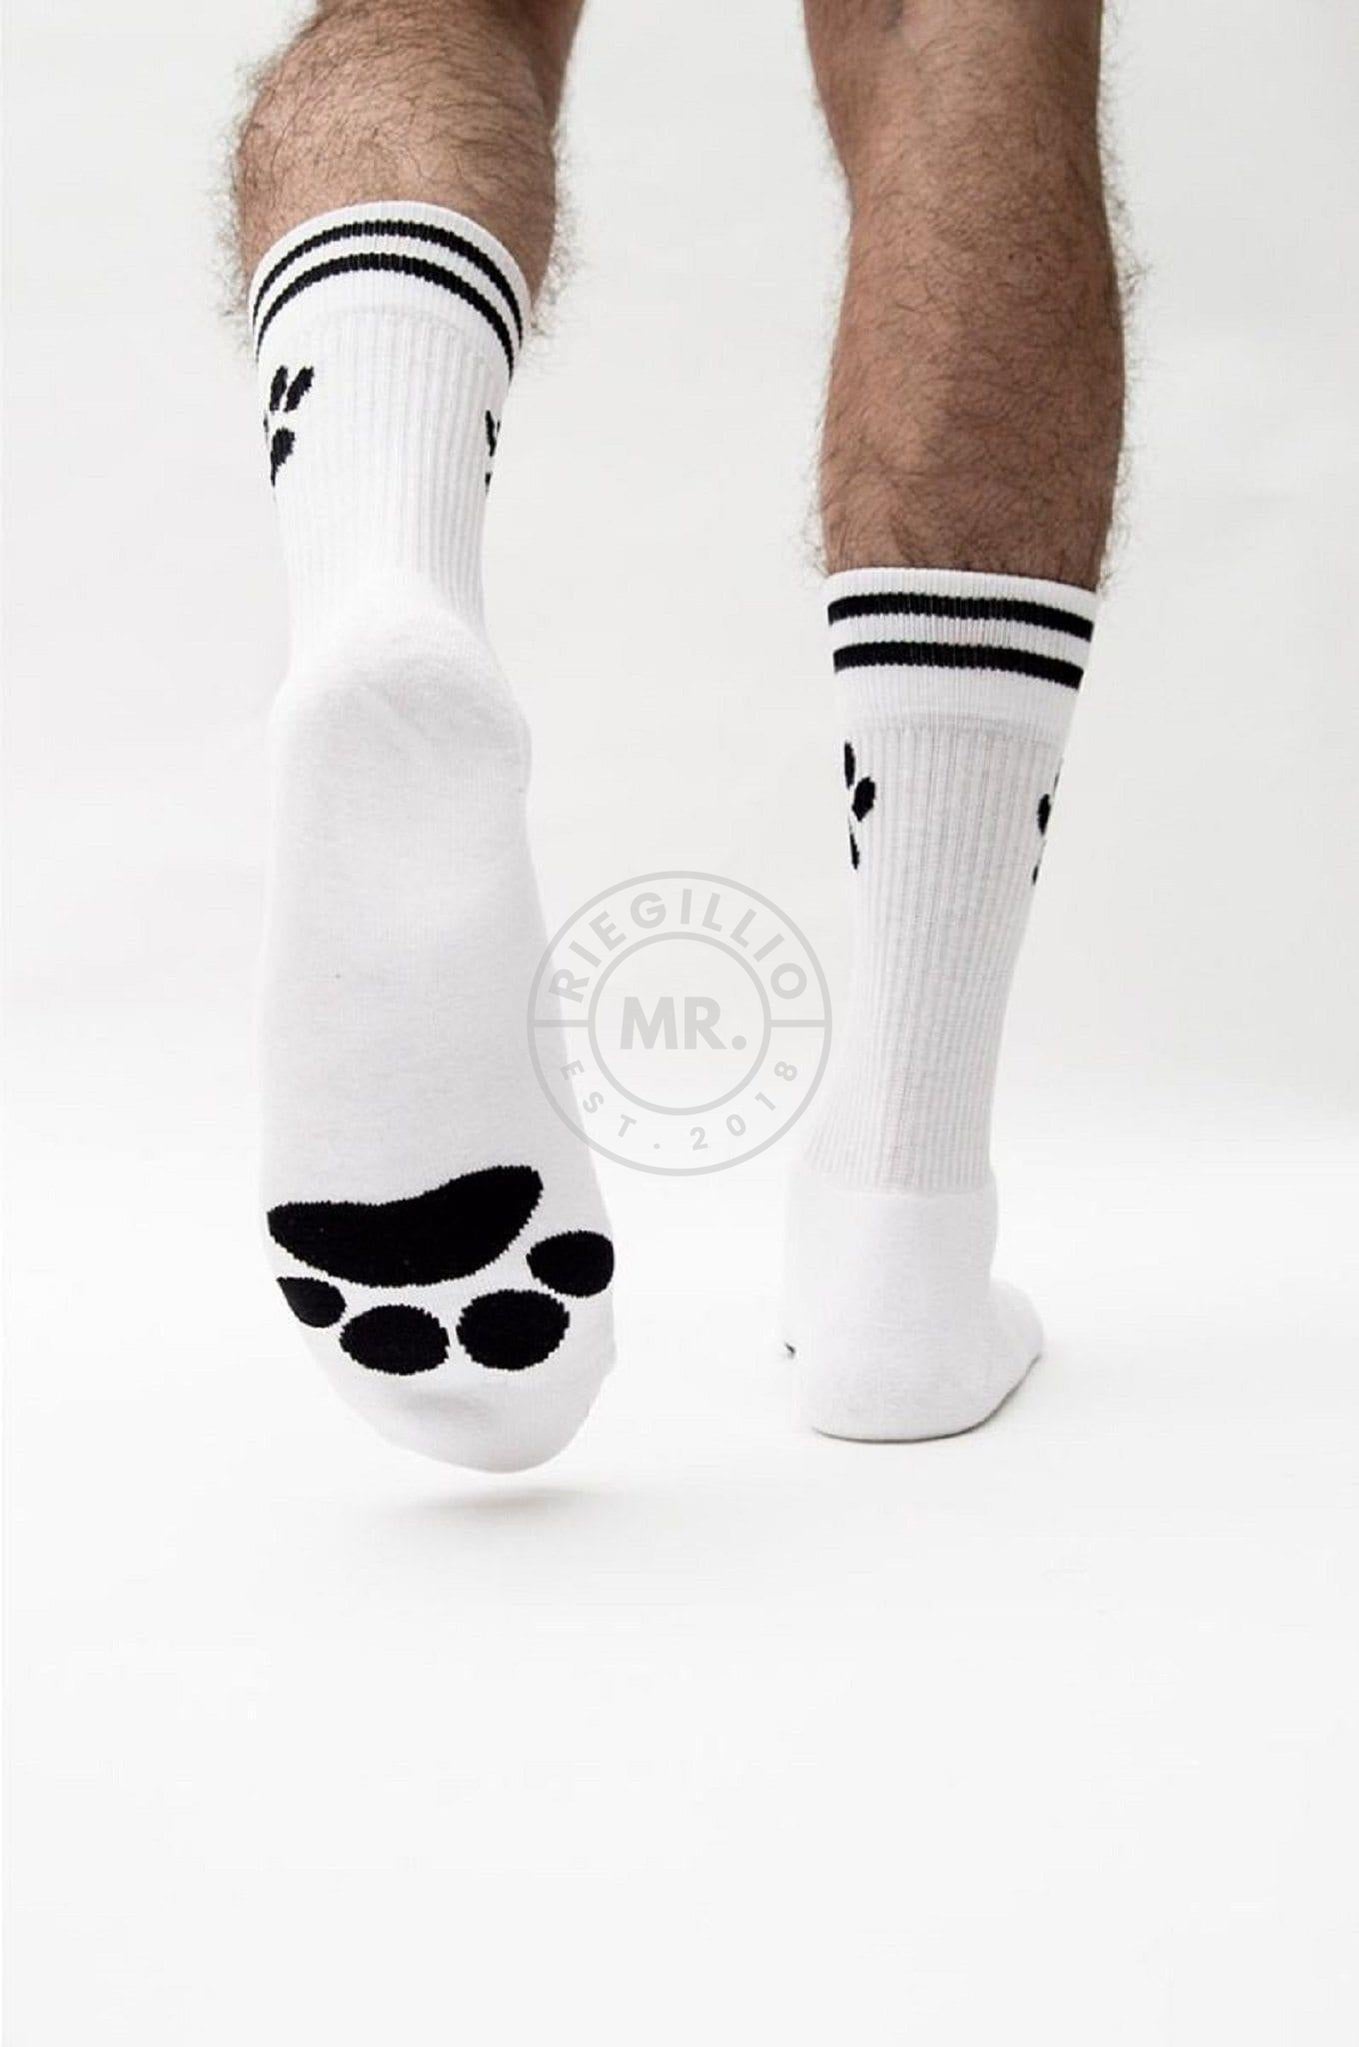 Sk8erboy PUPPY Socks White at MR. Riegillio